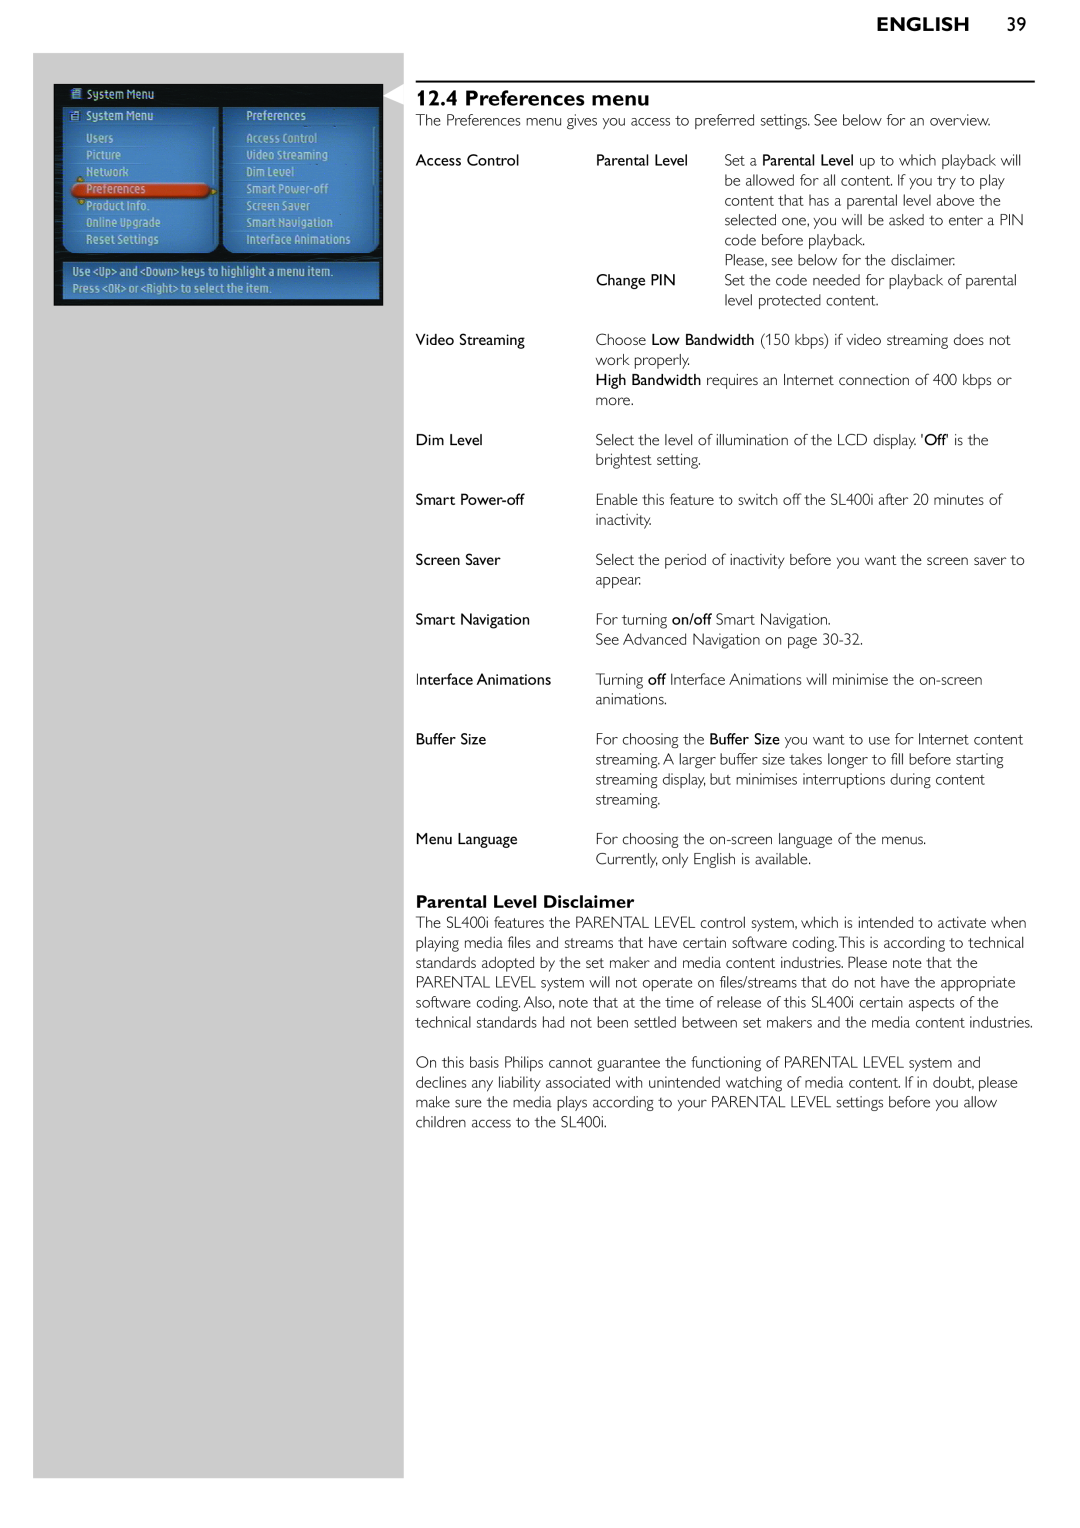 Philips SL400i/37 manual Preferences menu, English, Parental Level Disclaimer 